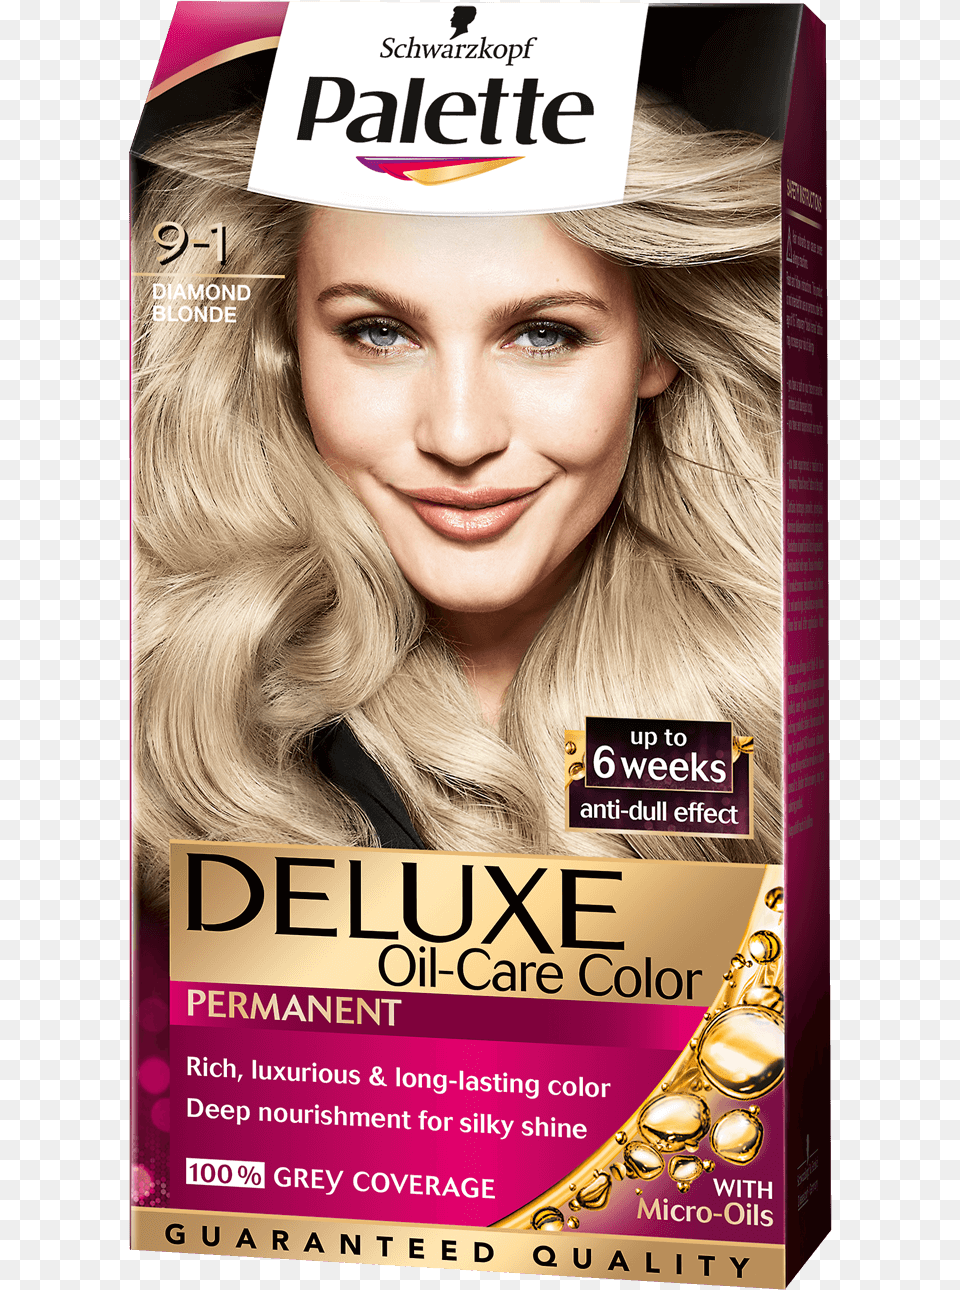 Palette Com Deluxe Baseline 9 1 Diamond Blonde Schwarzkopf Palette Deluxe, Advertisement, Publication, Poster, Adult Free Png Download